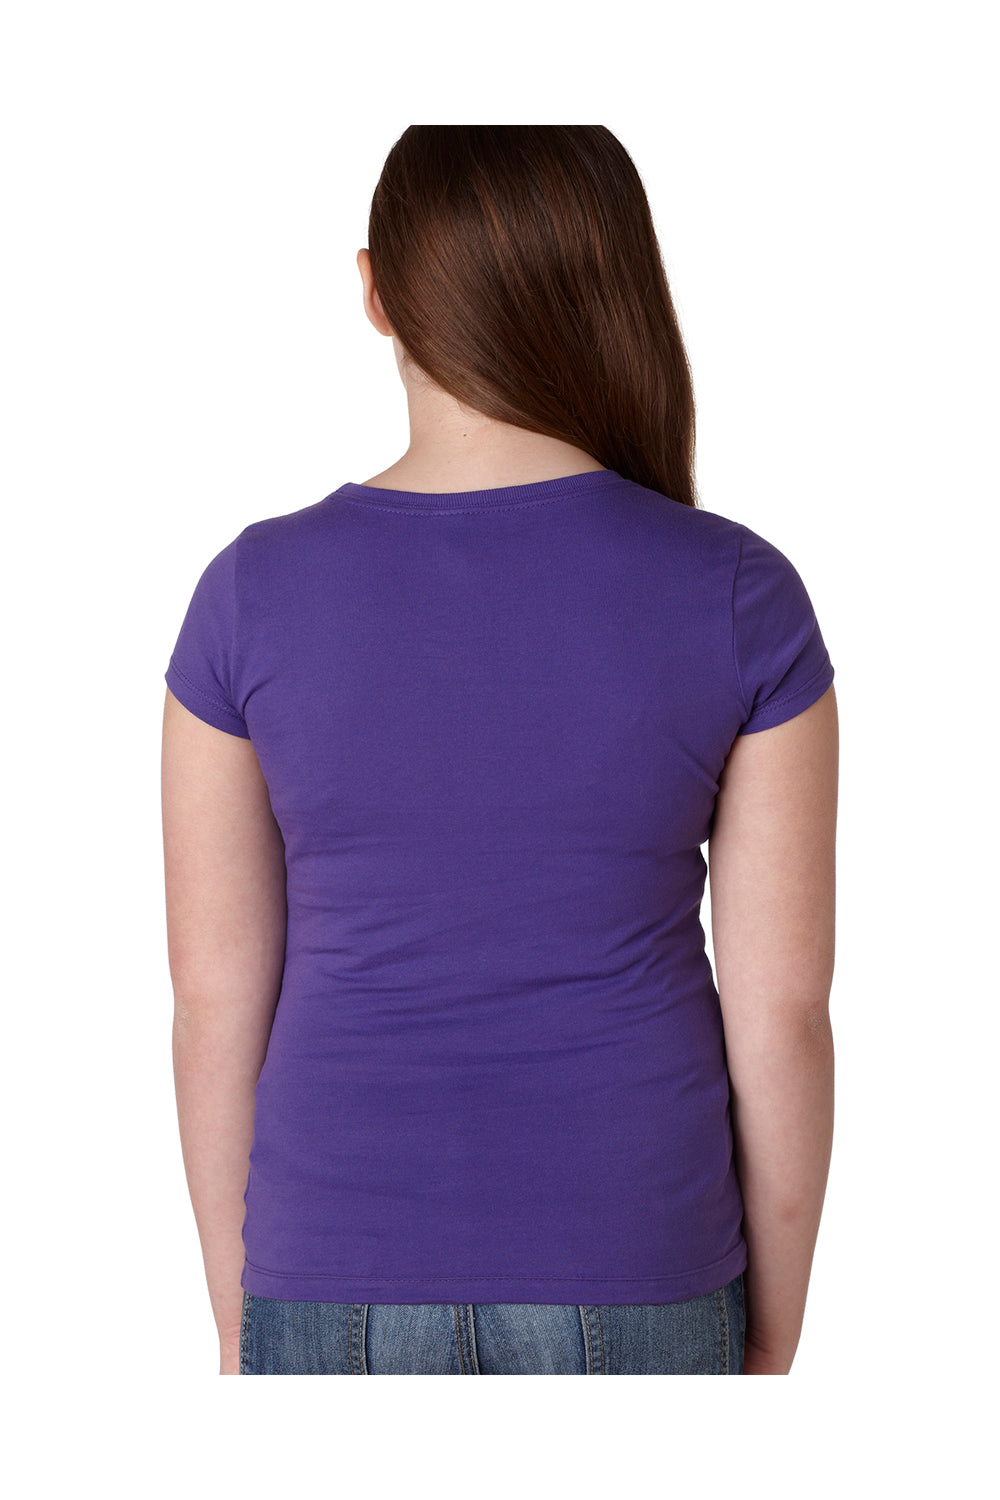 Next Level N3710 Youth Princess Fine Jersey Short Sleeve Crewneck T-Shirt Purple Rush Back